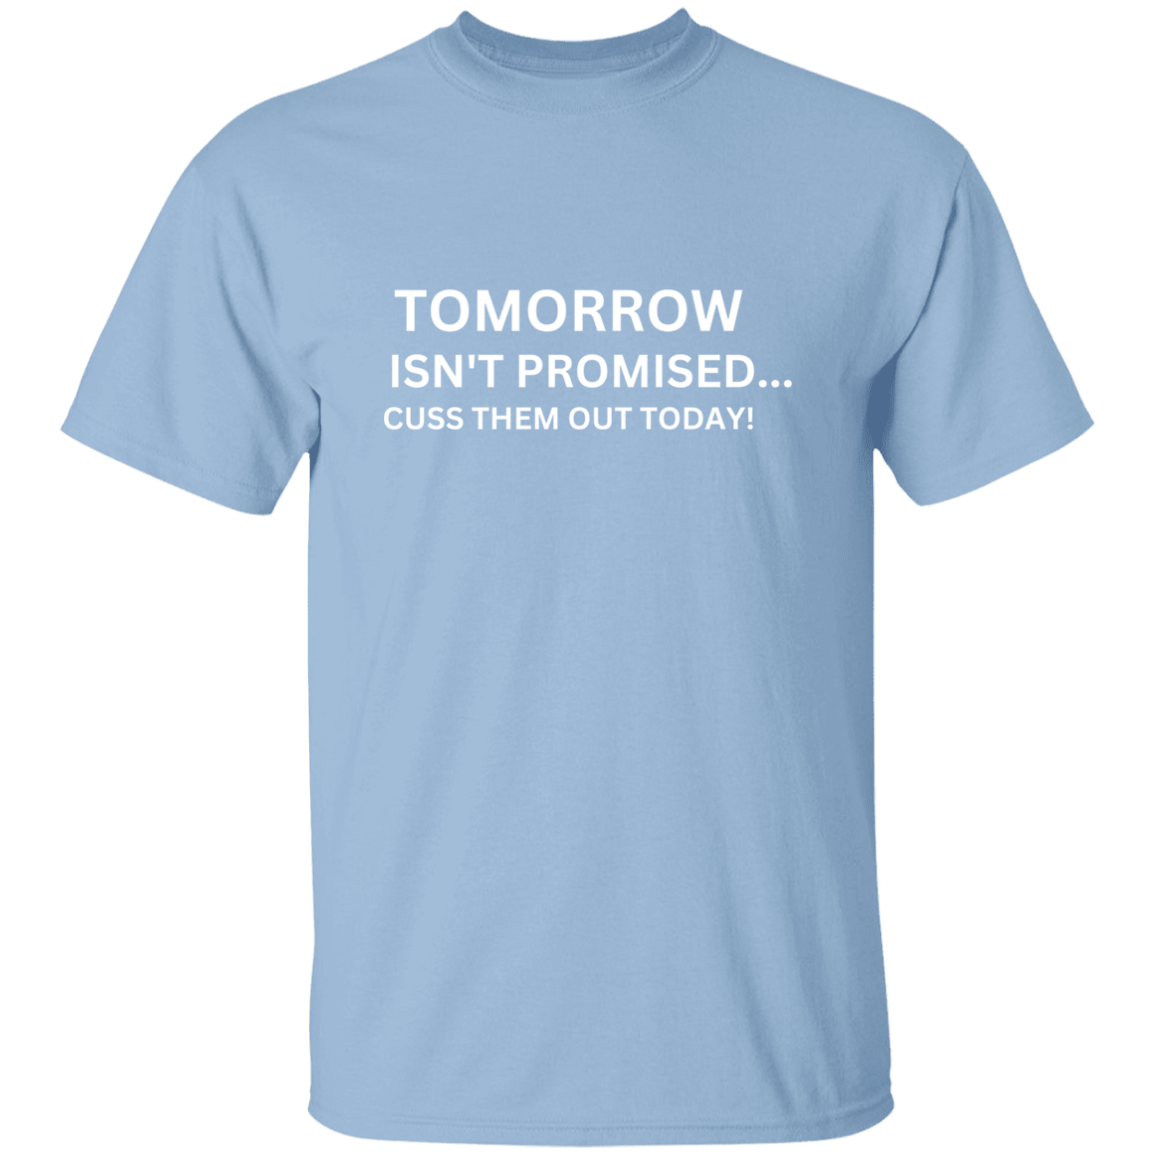 Tomorrow Isn't Promised 5.3 oz. T-Shirt